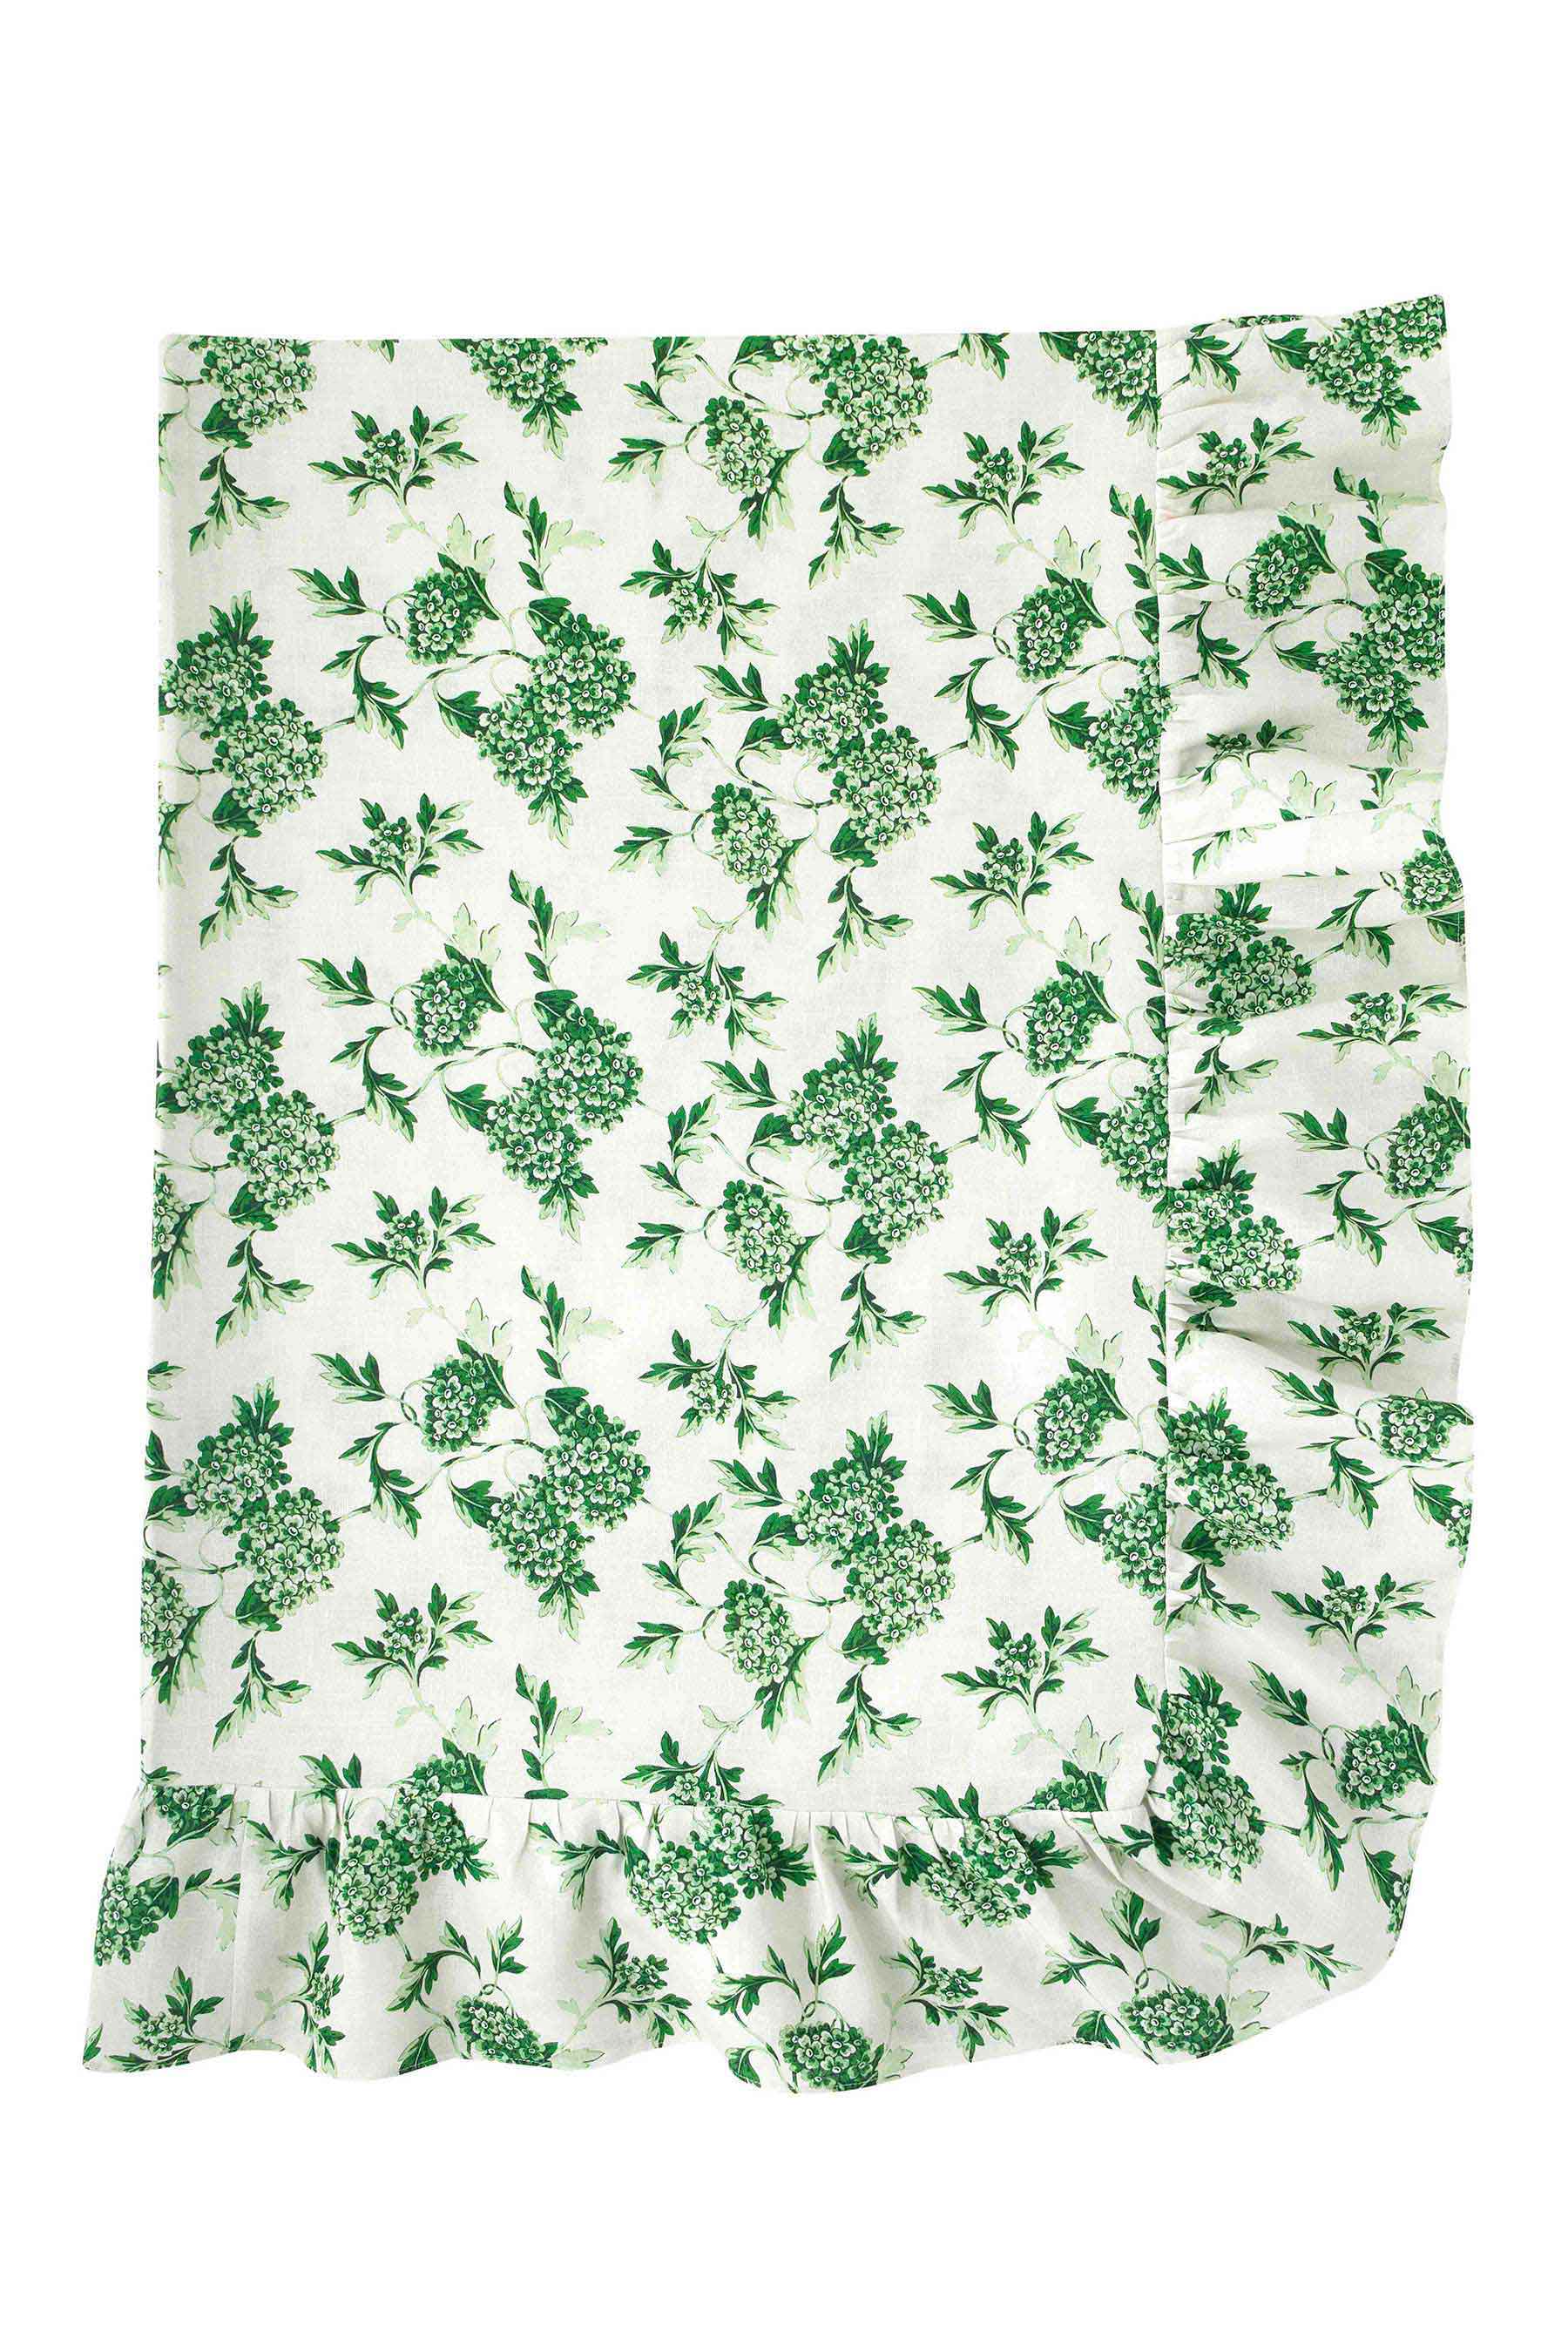 YOLKE's Hydrangea Print Linen Tablecloth